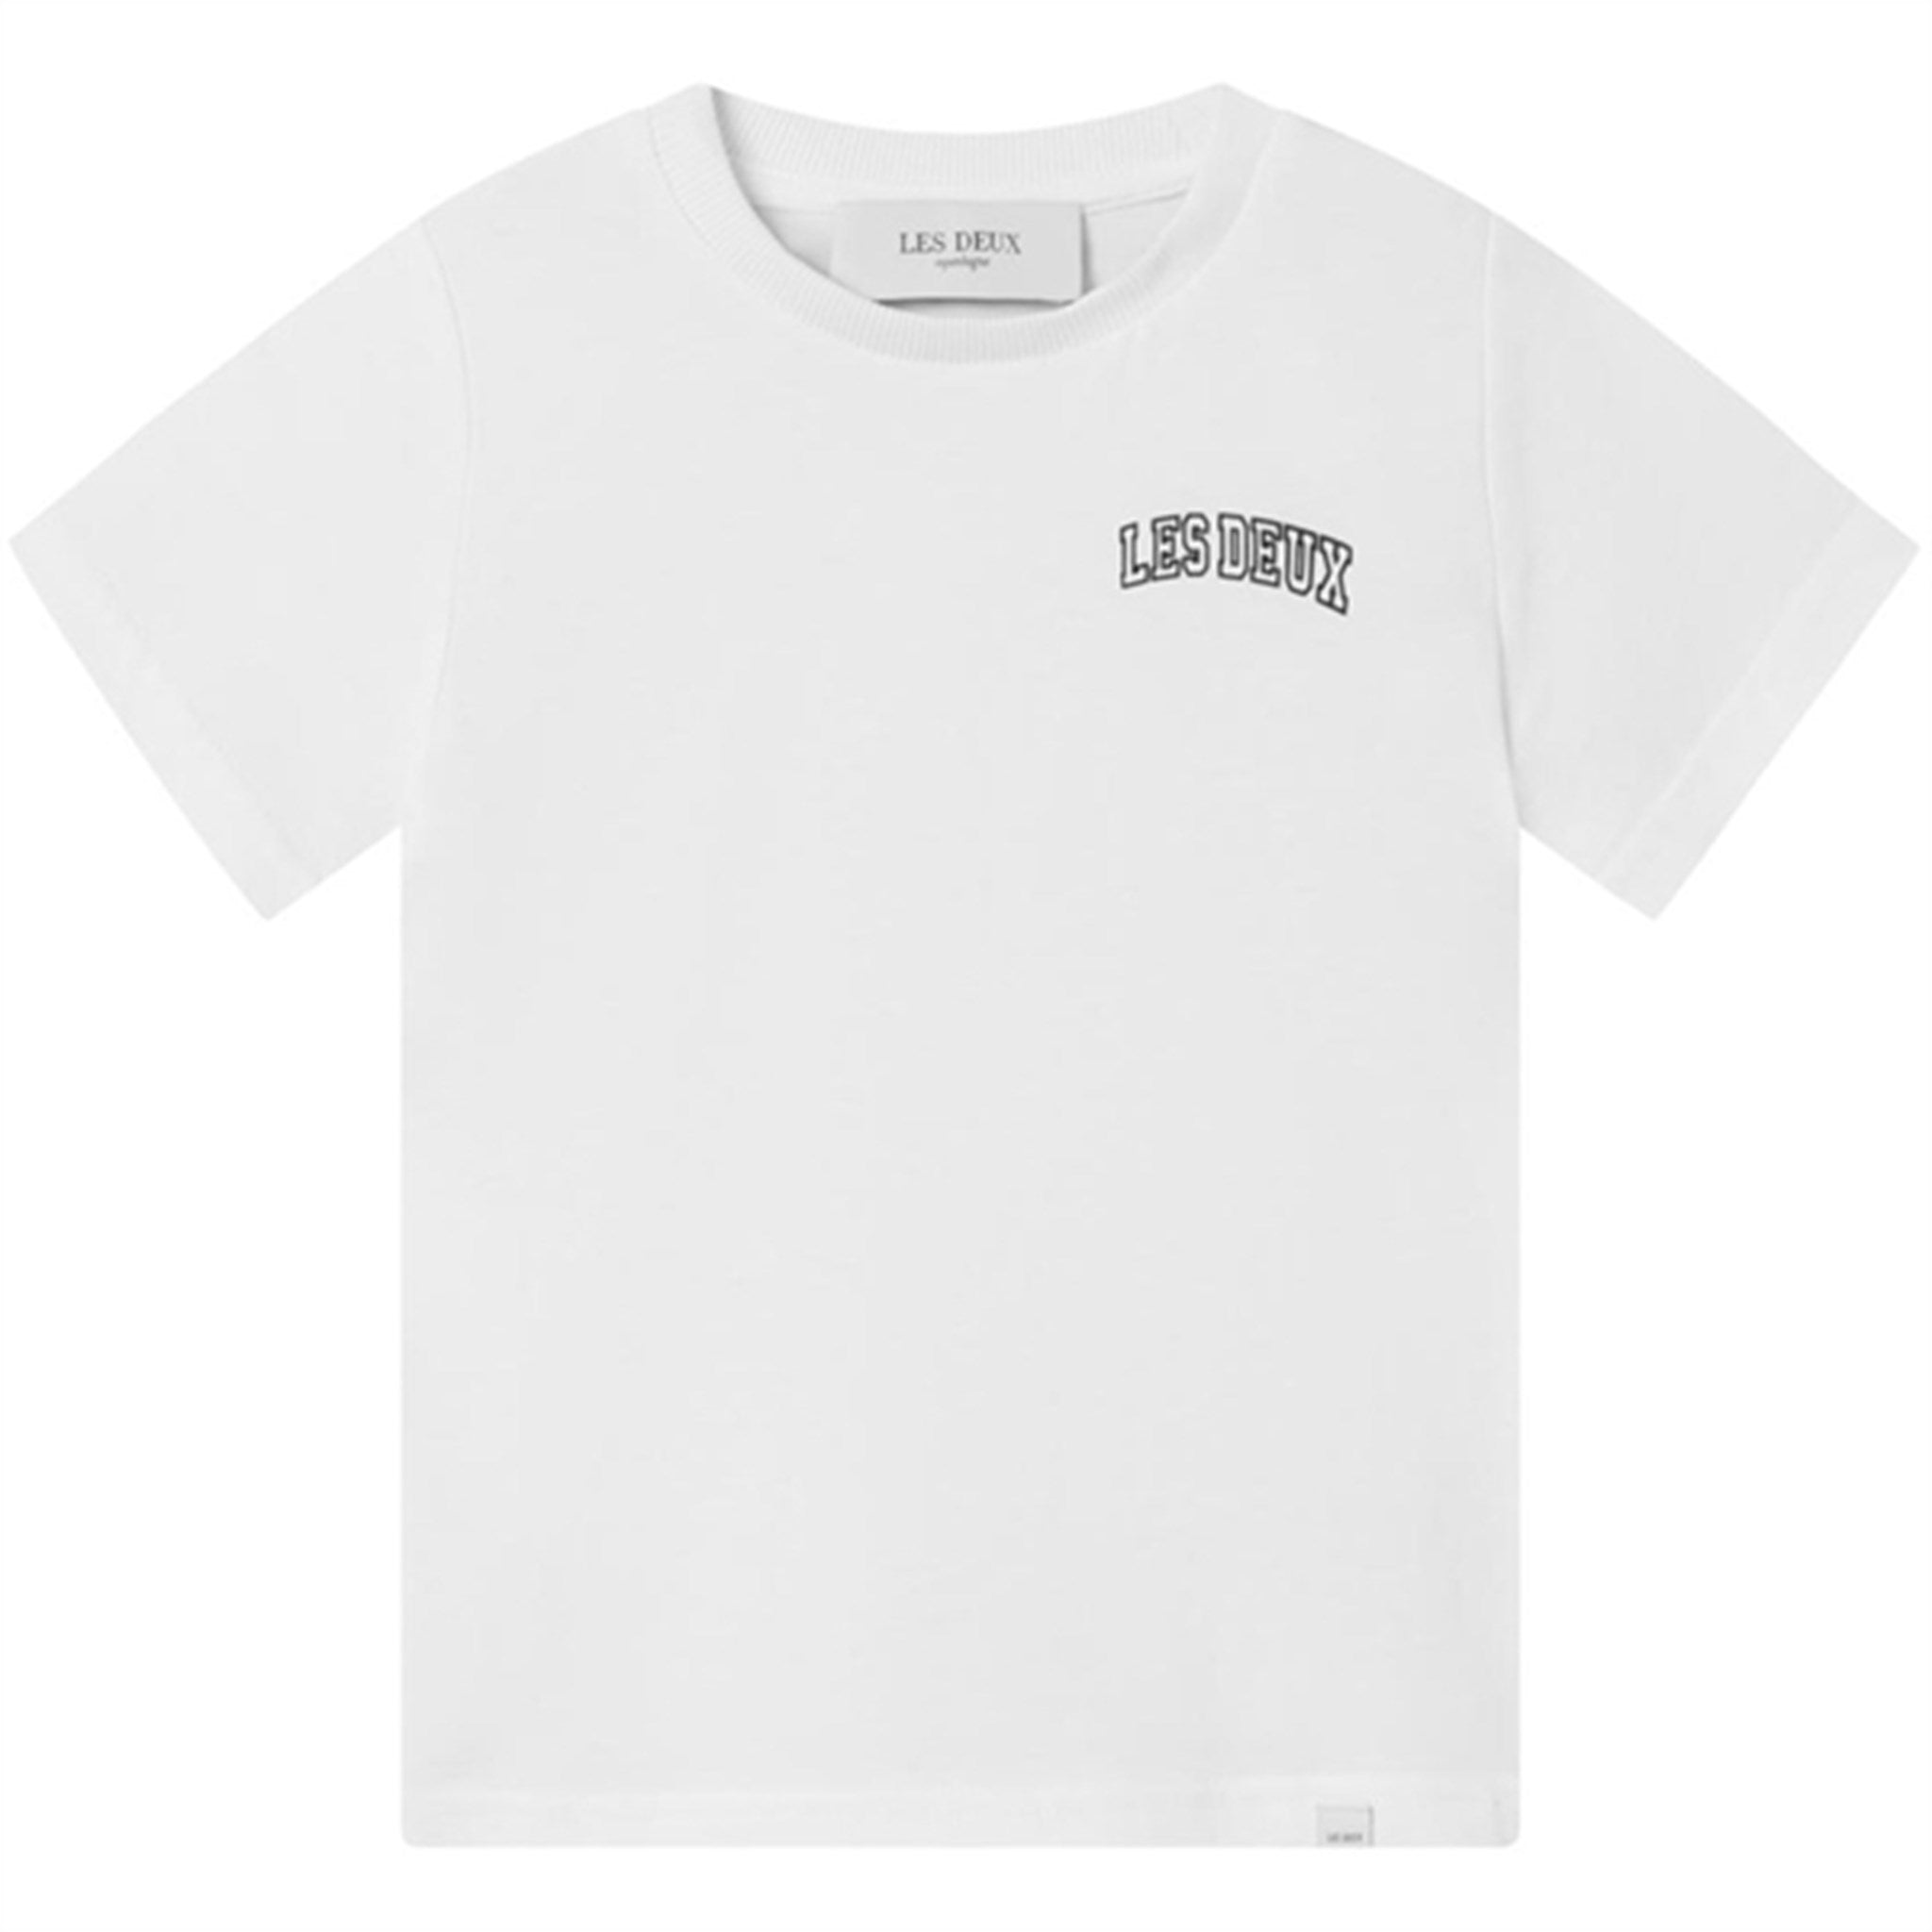 Les Deux Kids White/Black Blake T-Shirt